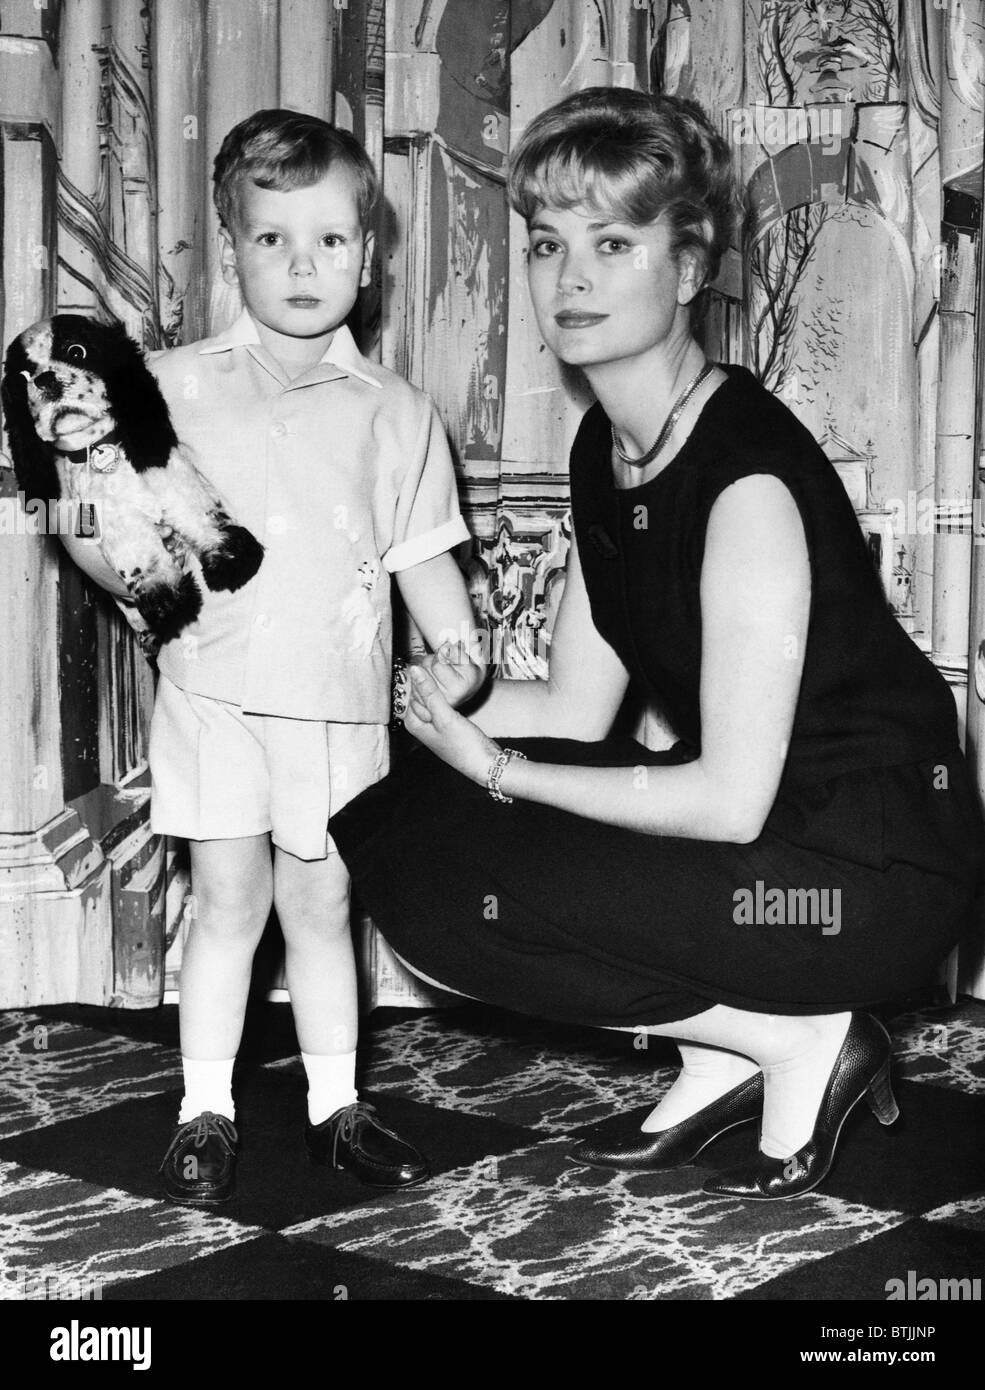 princess-grace-kelly-poses-with-her-son-prince-albert-april-28-1961-BTJJNP.jpg